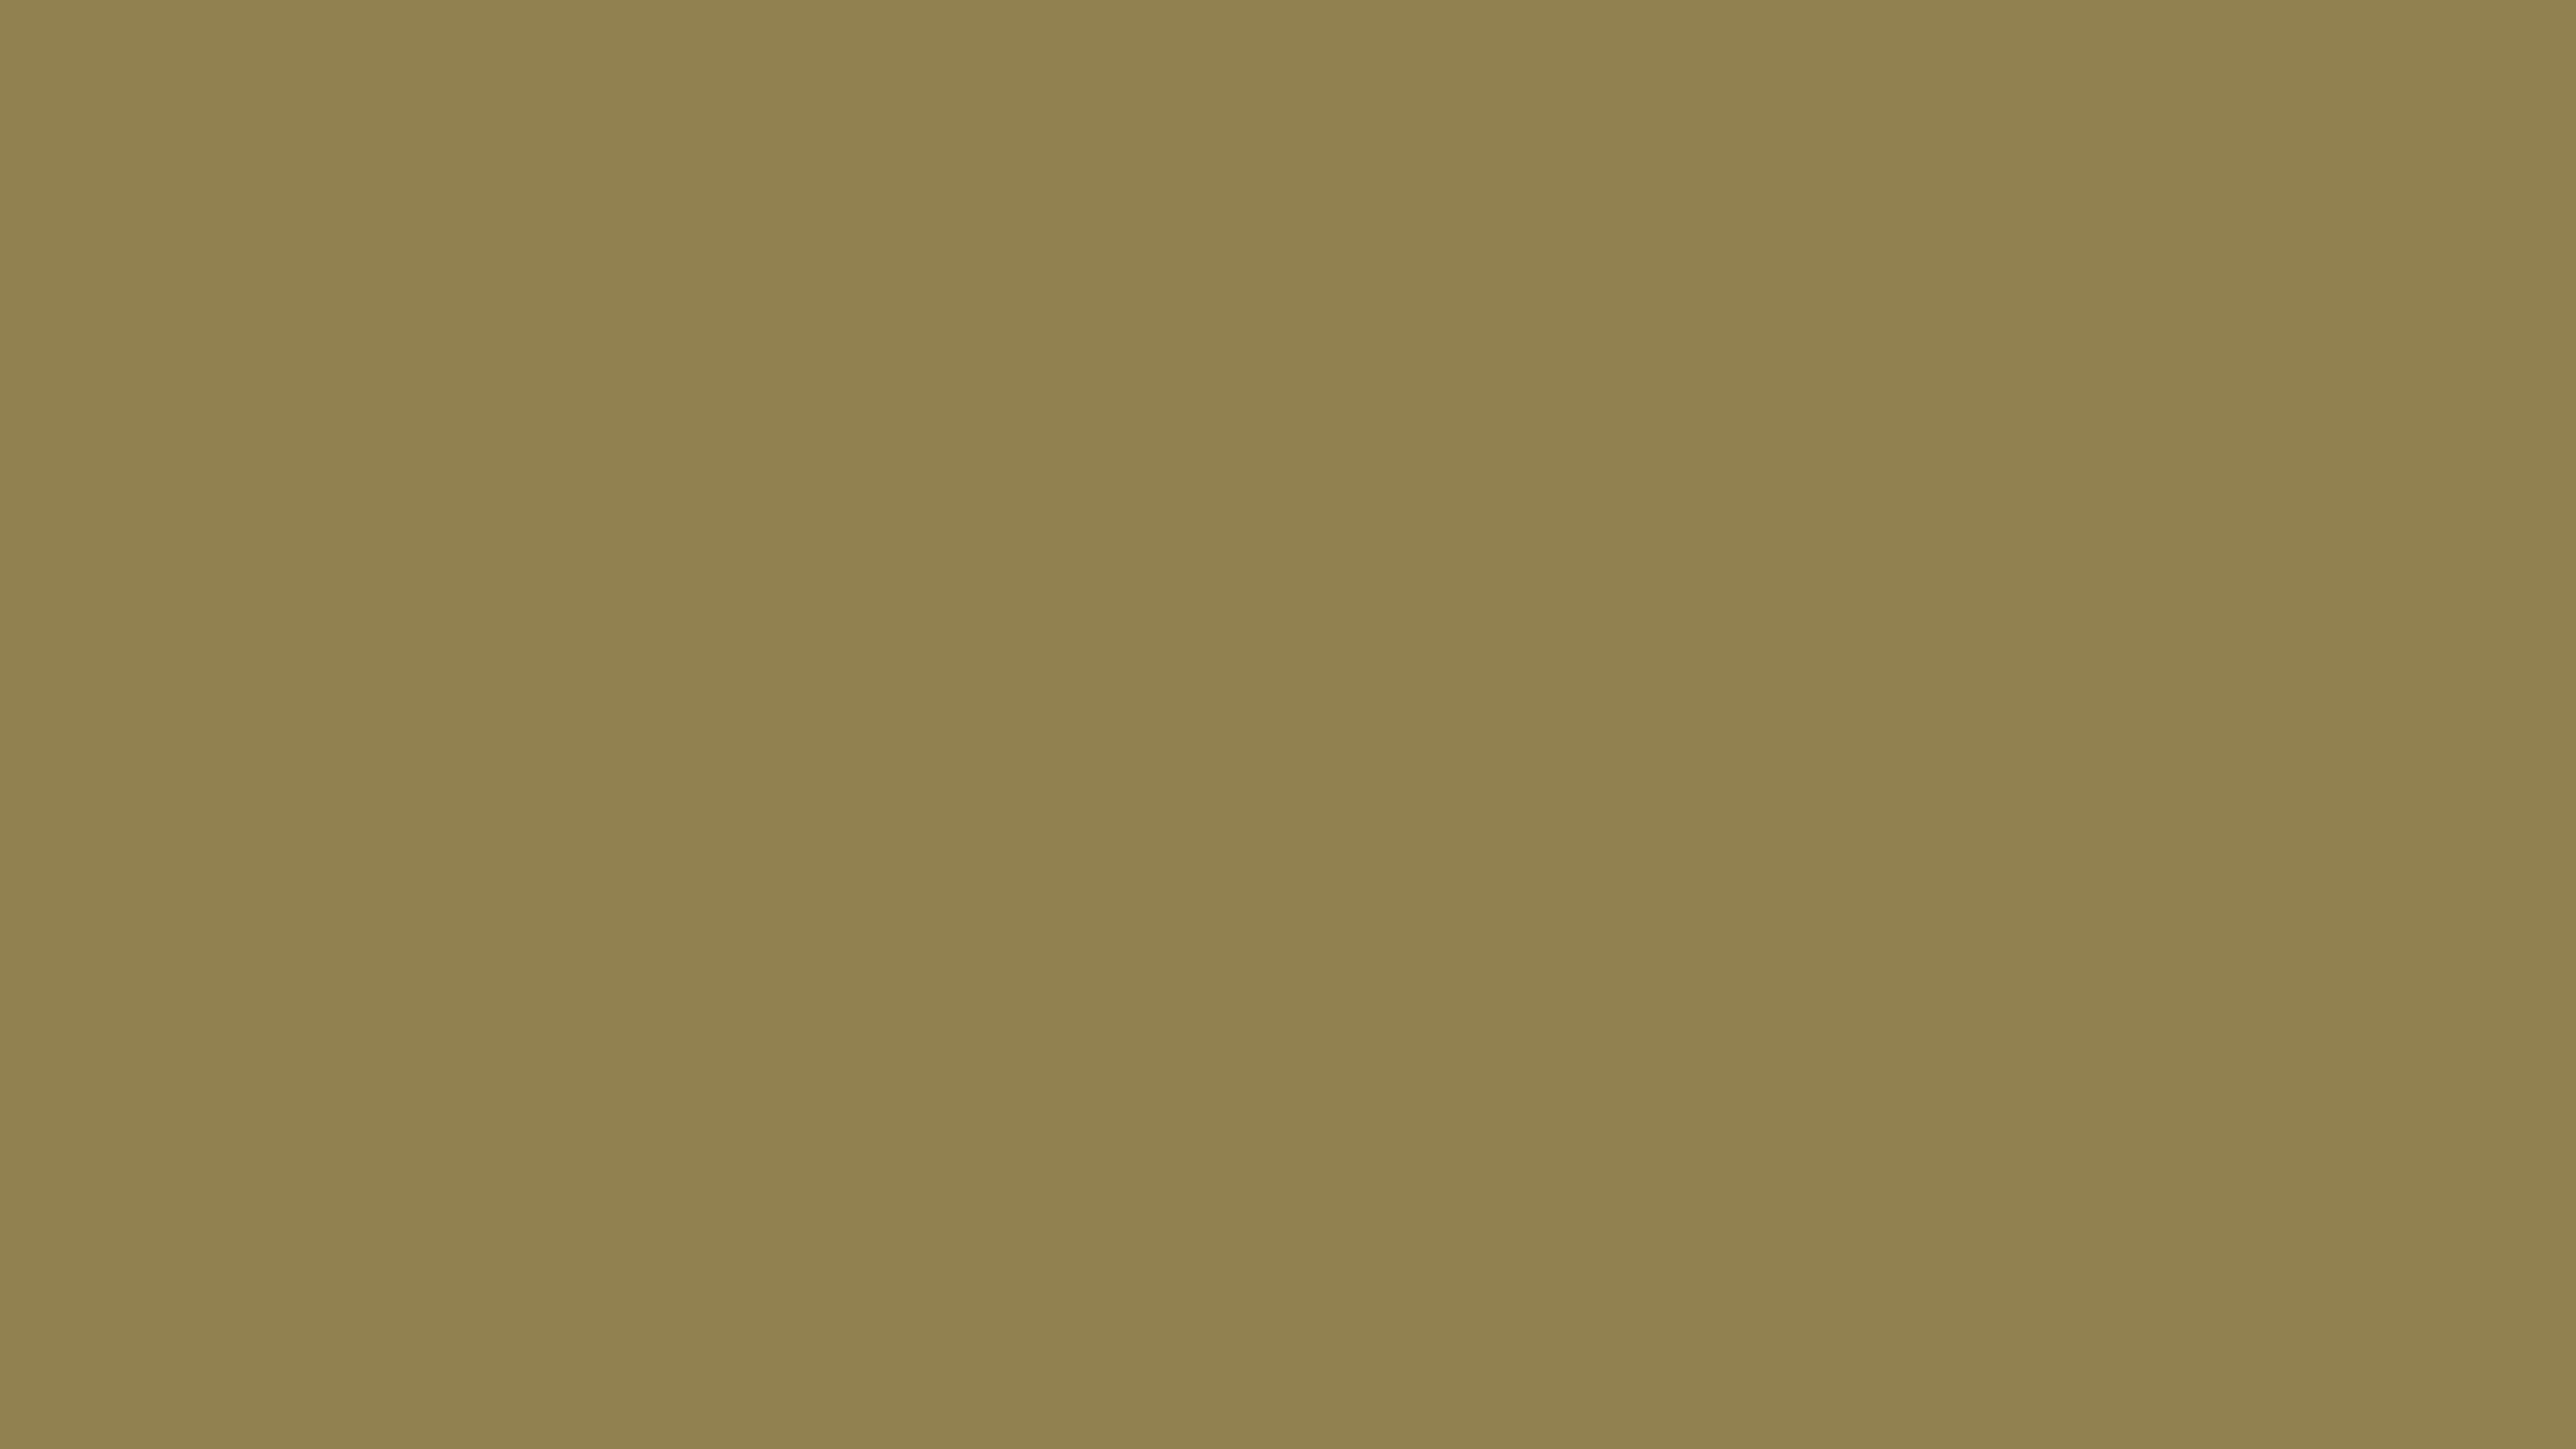 7680x4320 Dark Tan Solid Color Background